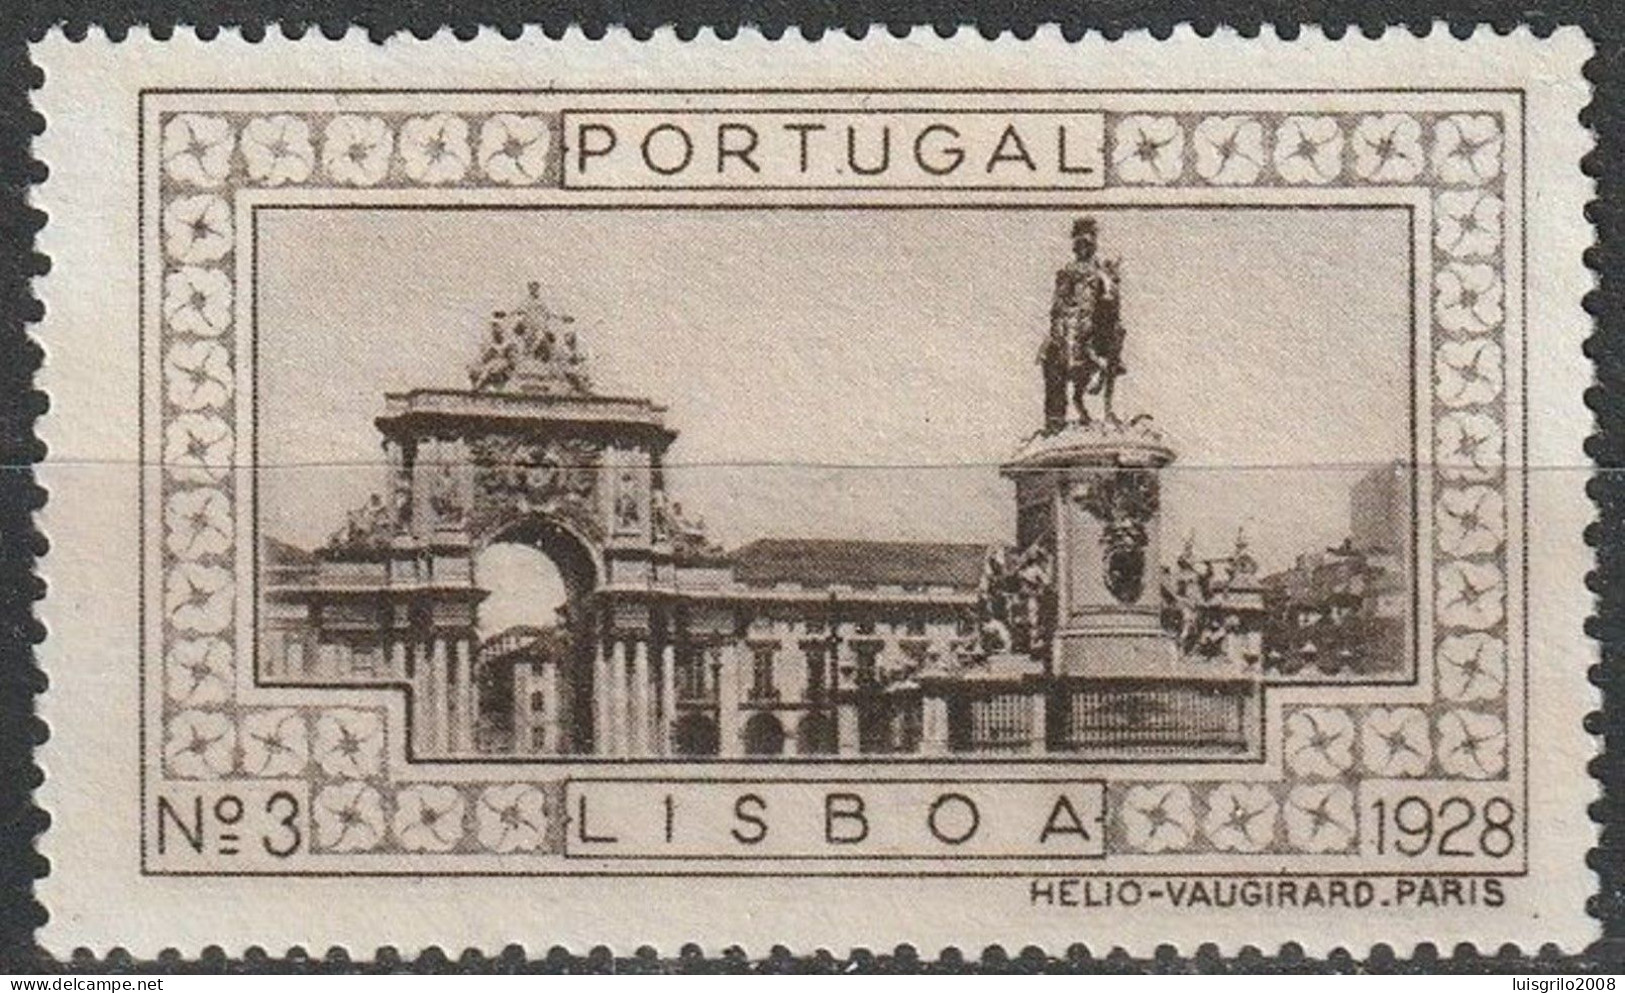 Vignette/ Vinheta, Portugal - 1928, Paisagens E Monumentos. Lisboa -||- MNG, Sans Gomme - Local Post Stamps